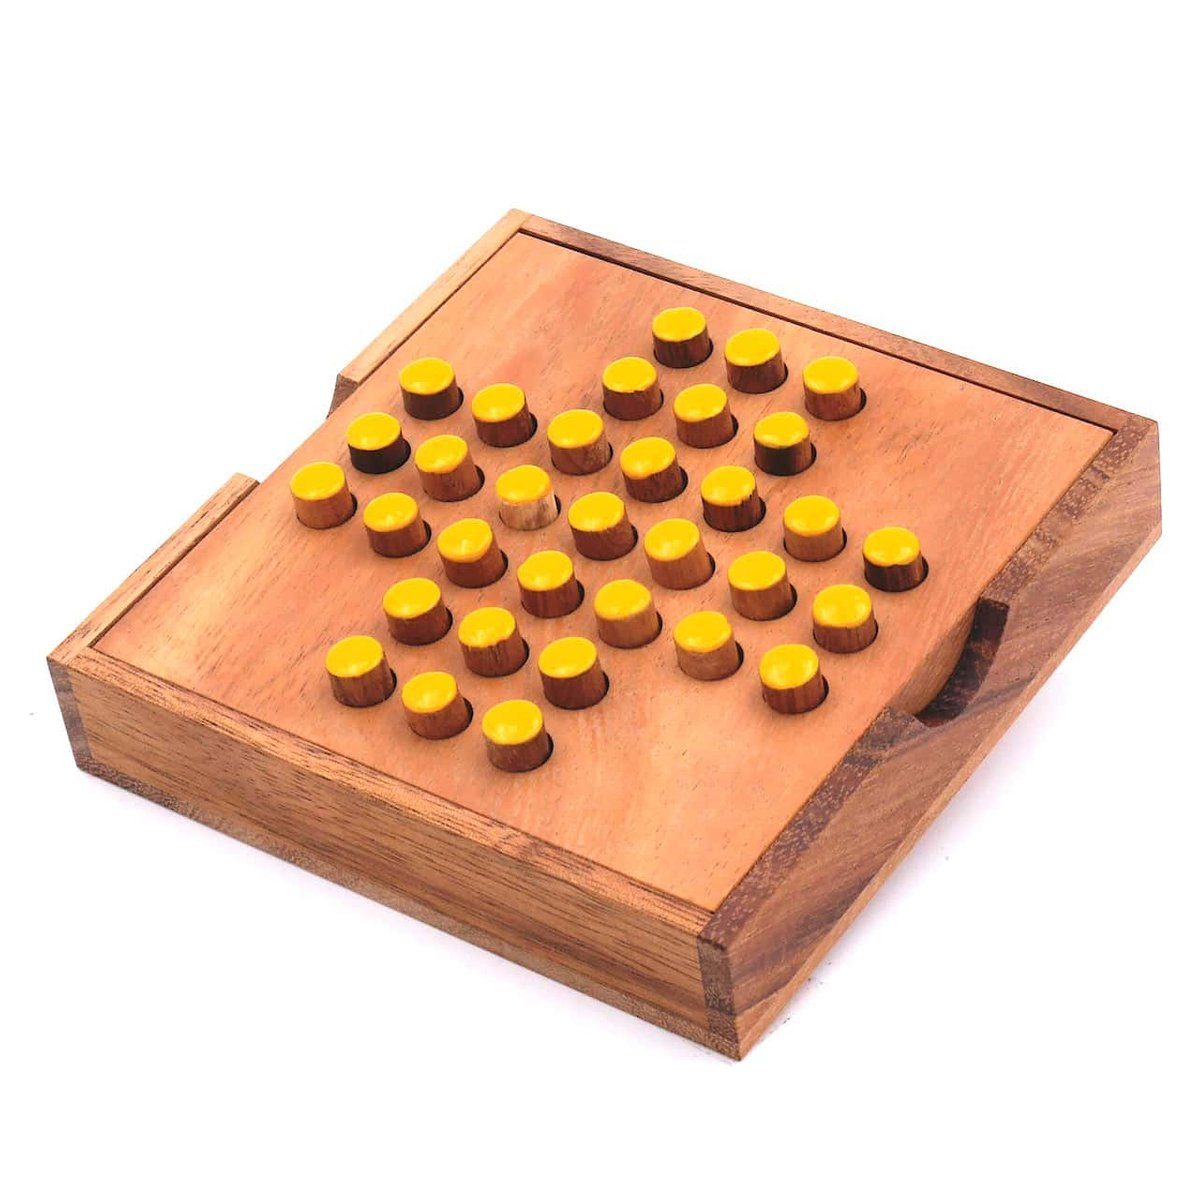 ROMBOL Denkspiele Spiel, Steckspiel Solitaire - unterhaltsamer Klassiker aus edlem Holz, Holzspiel gelb